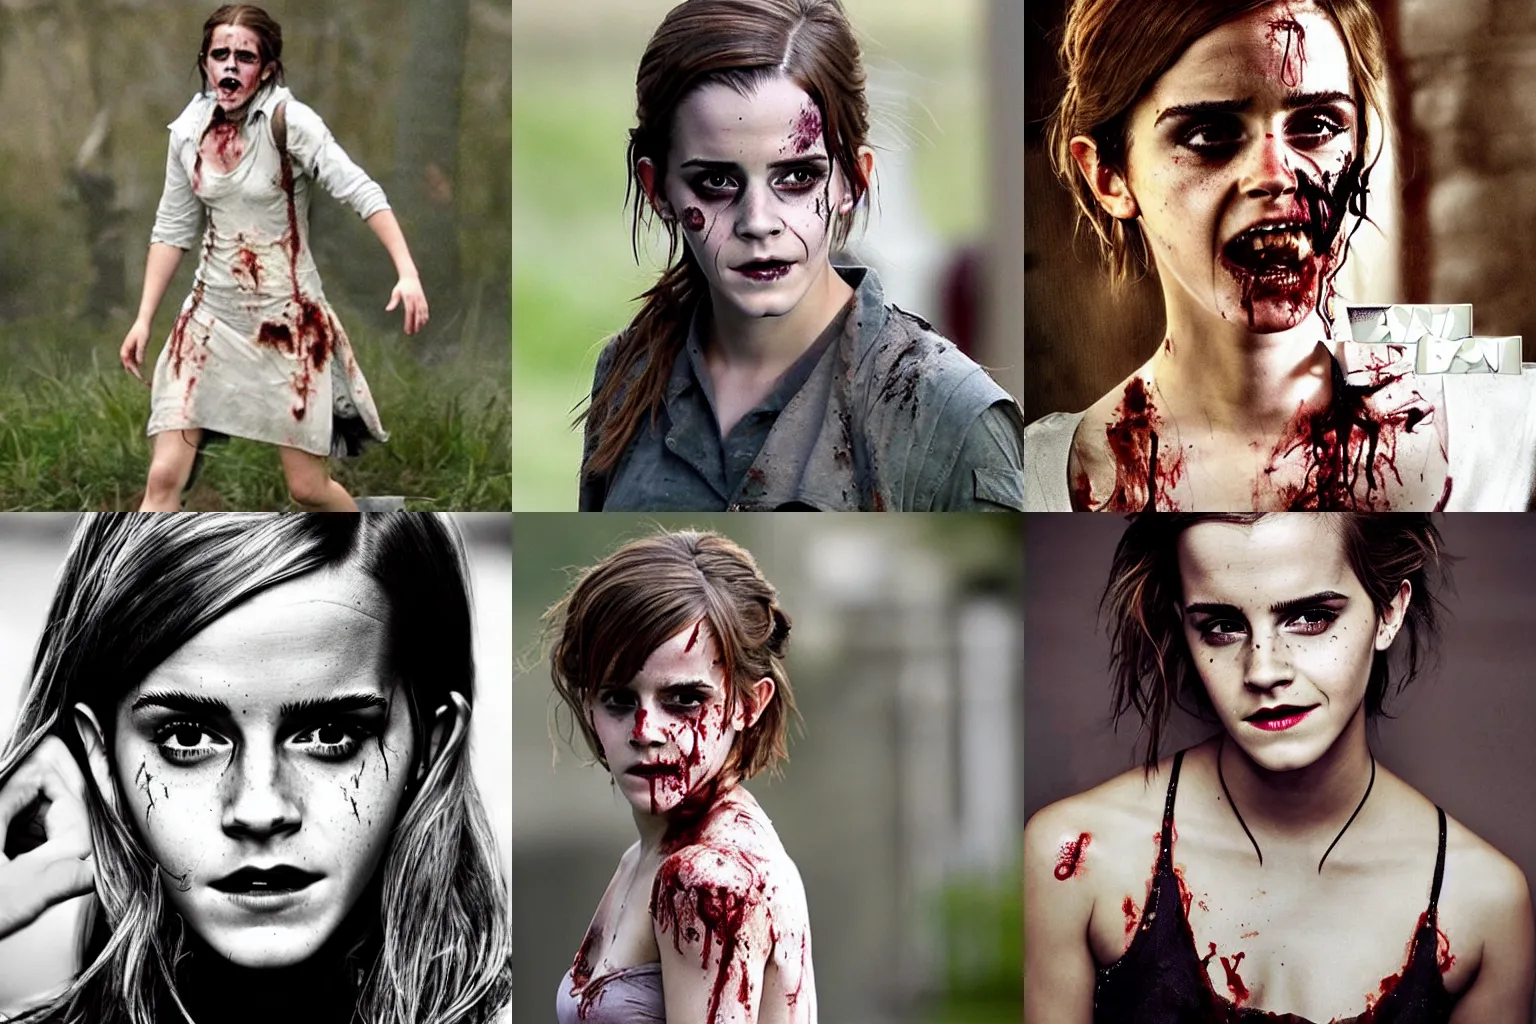 Prompt: Emma Watson as a zombie